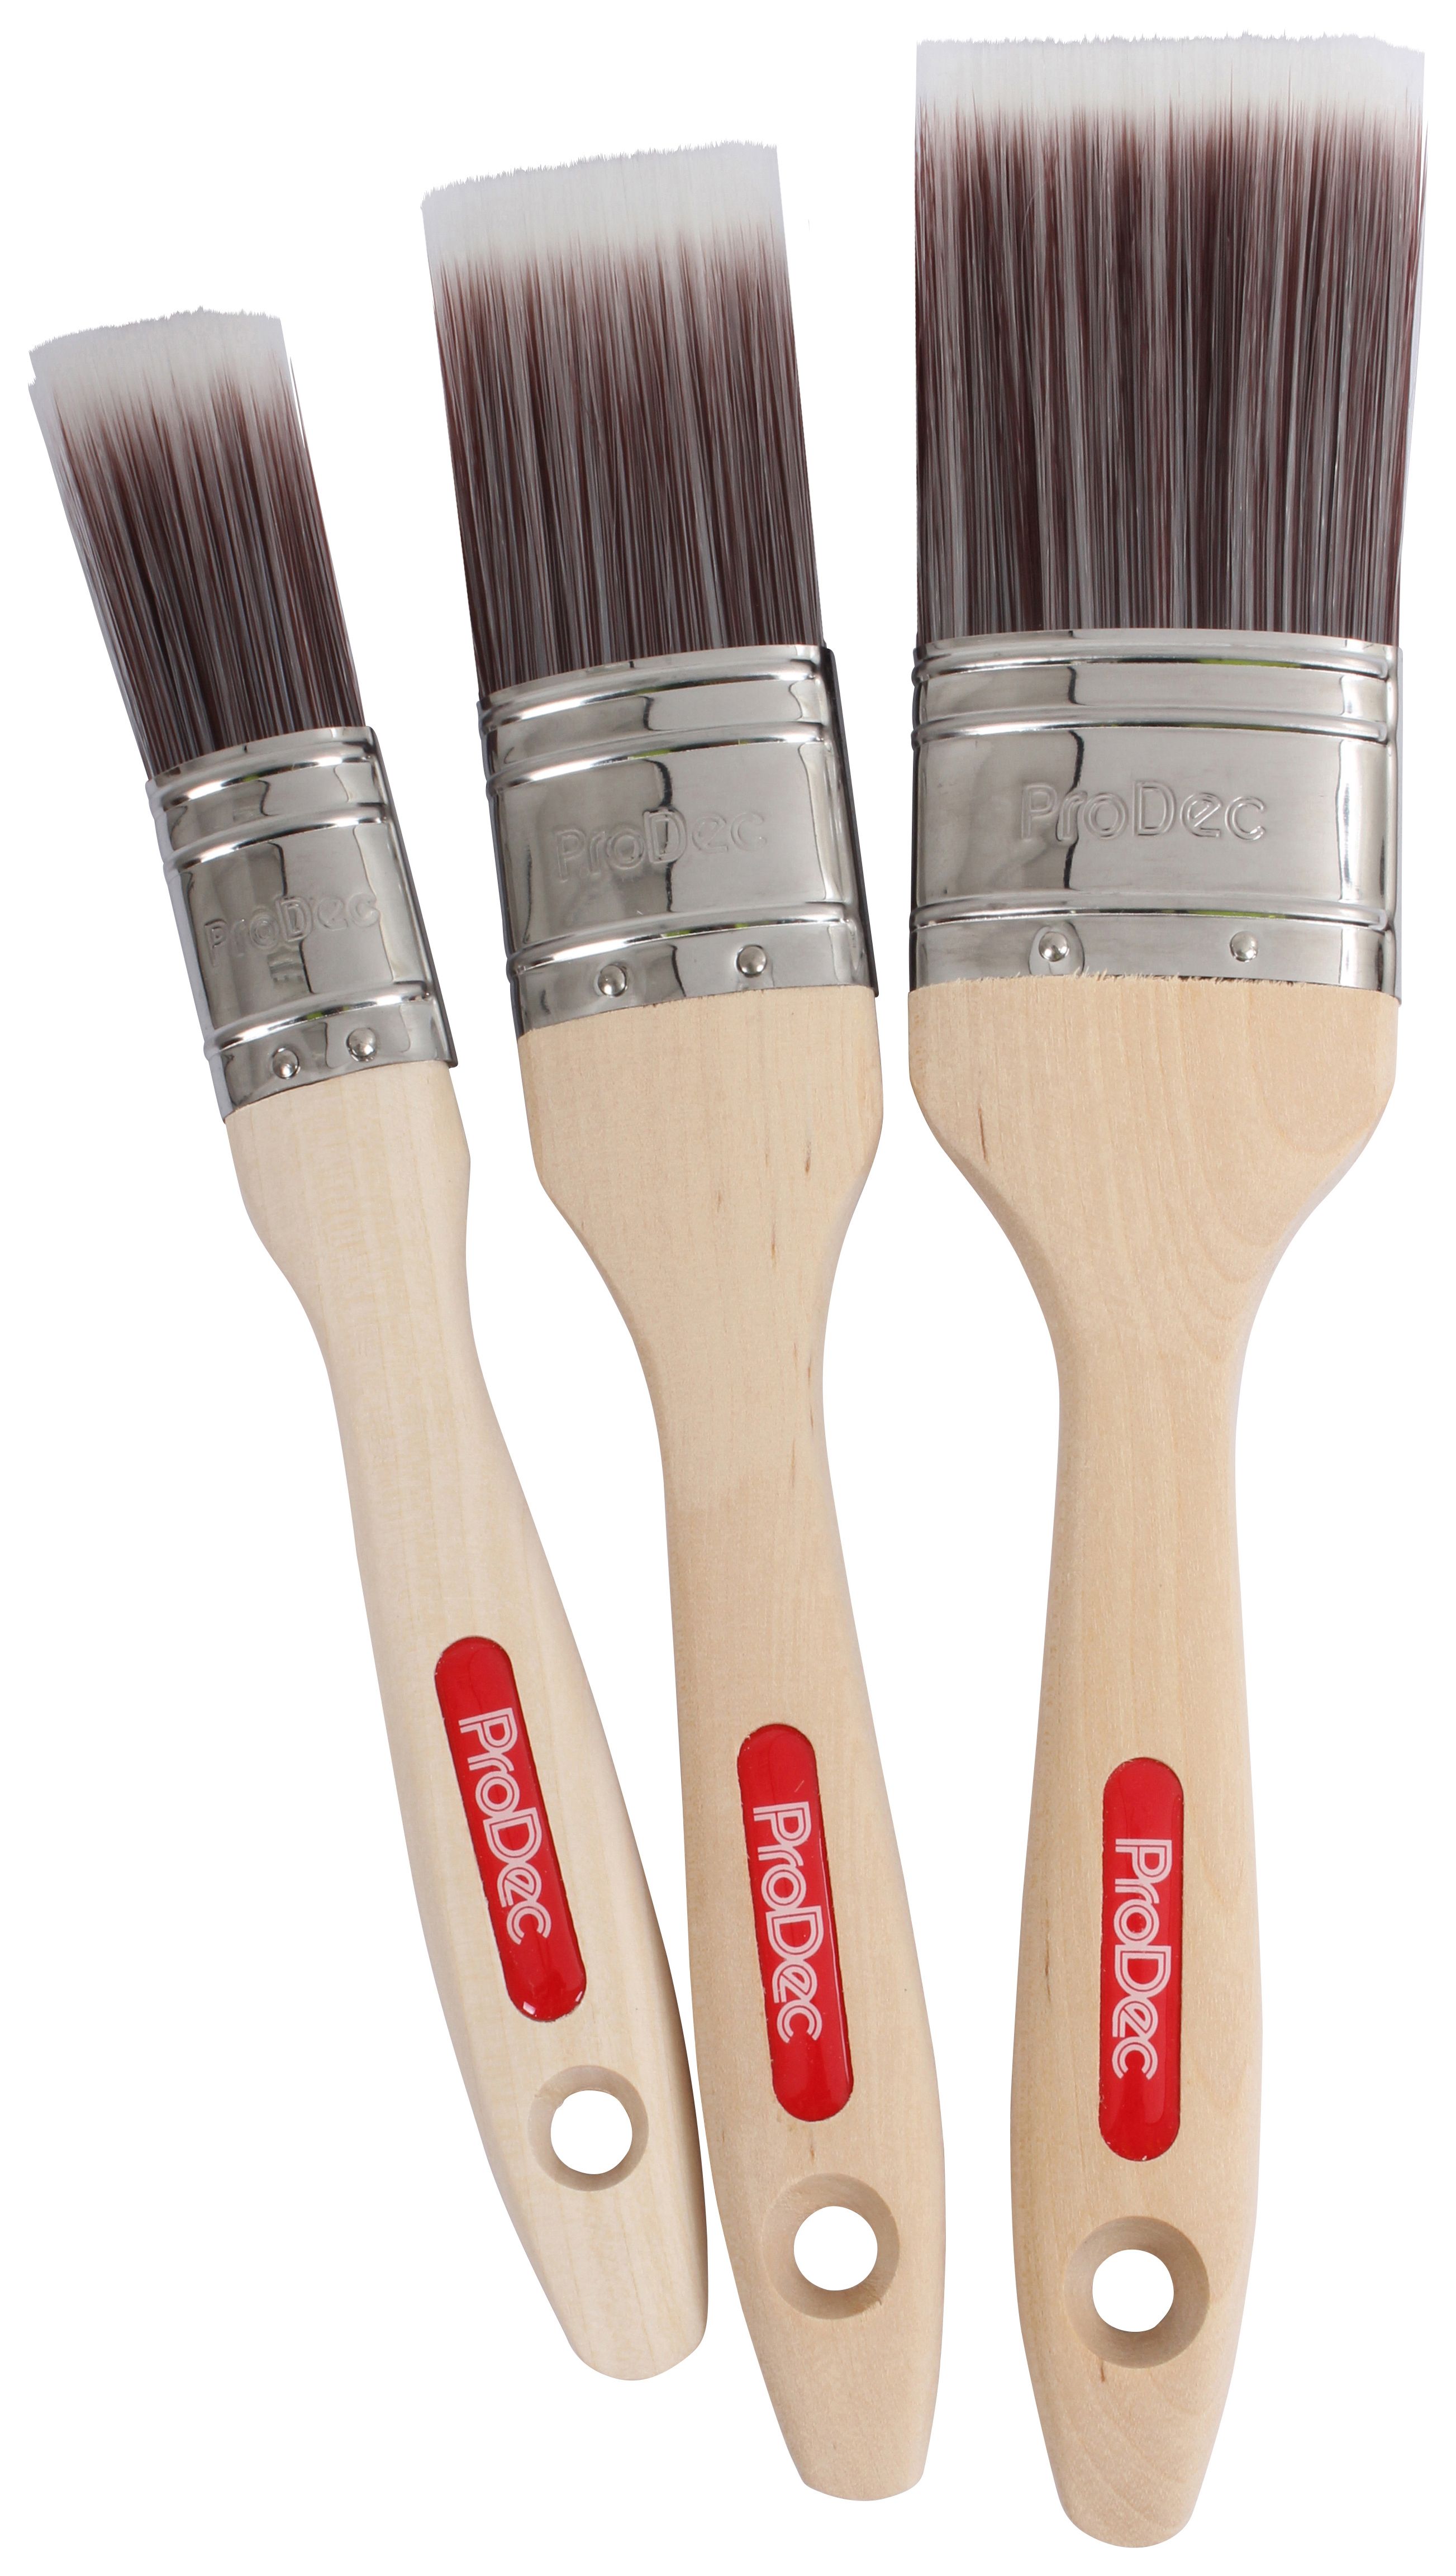 Image of ProDec Premier Oval Paint Brush Set - Pack of 3